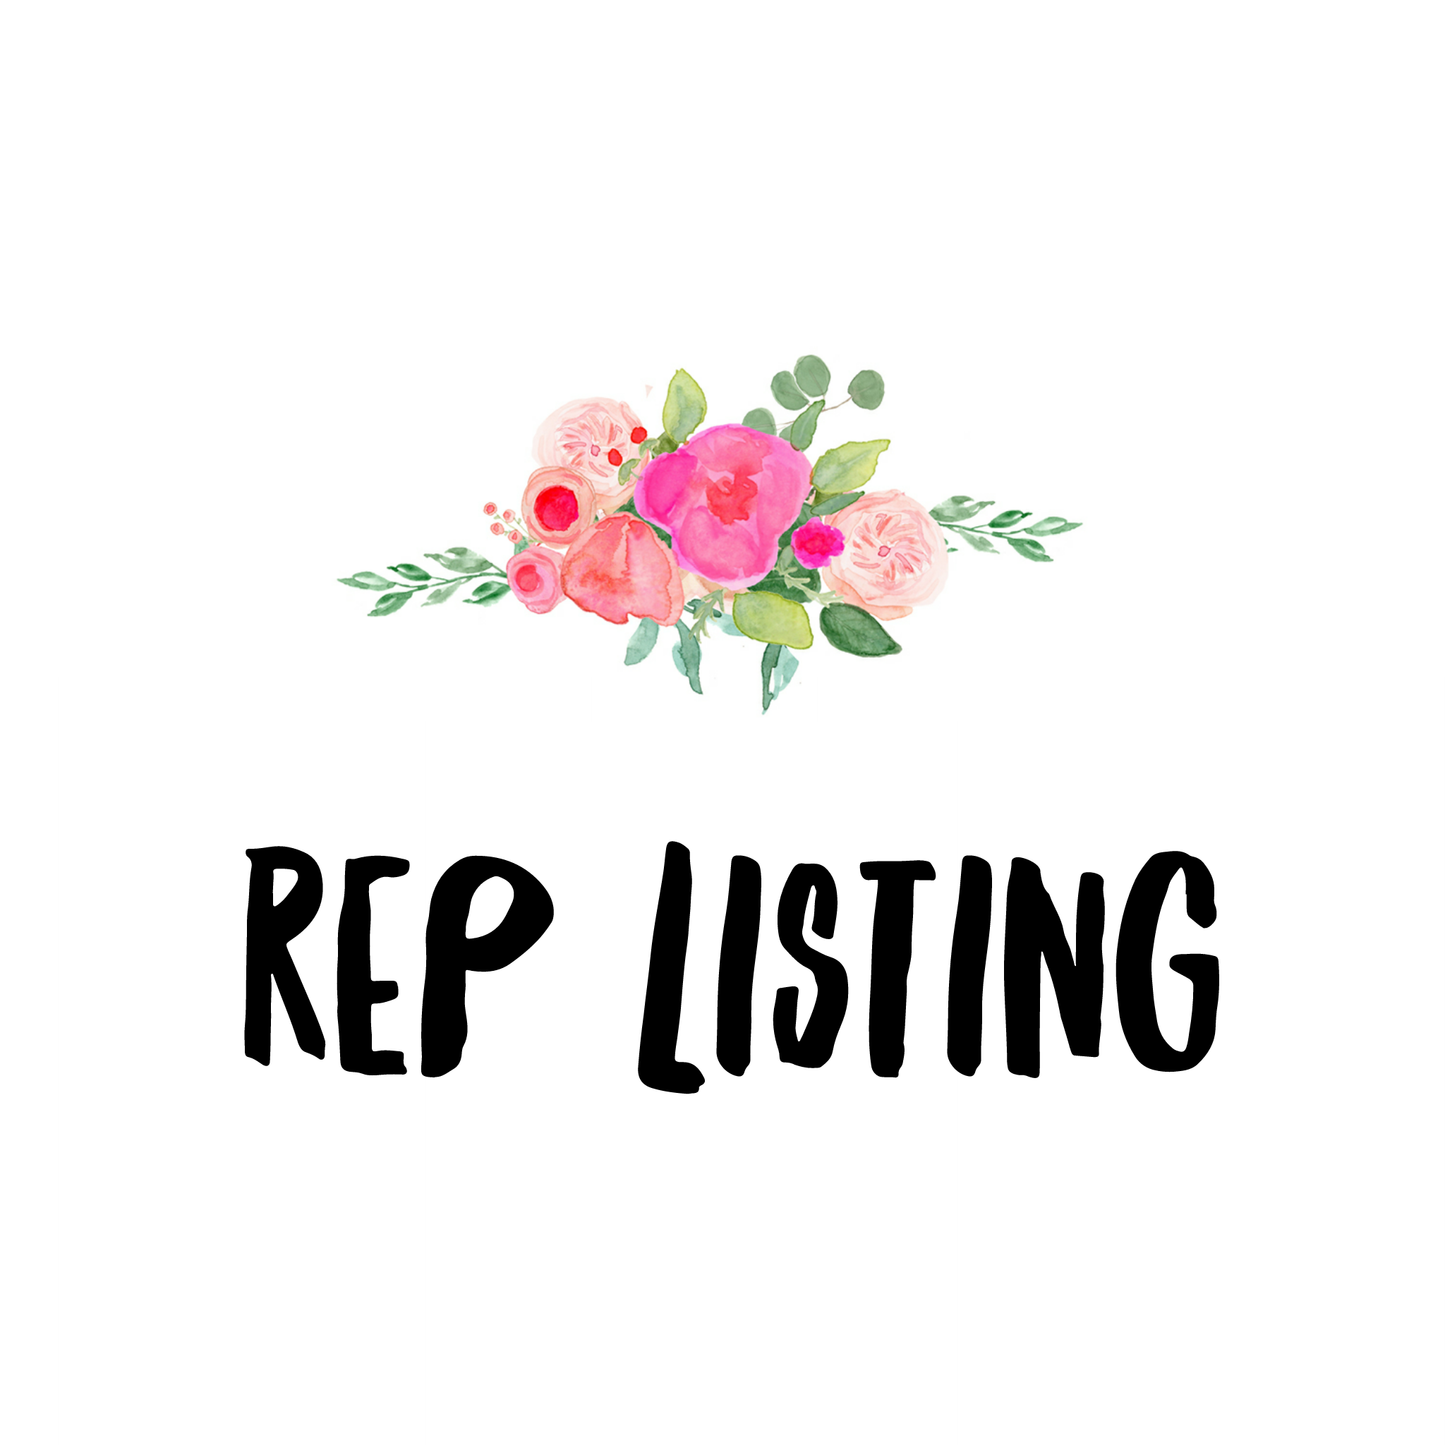 Rep Listing